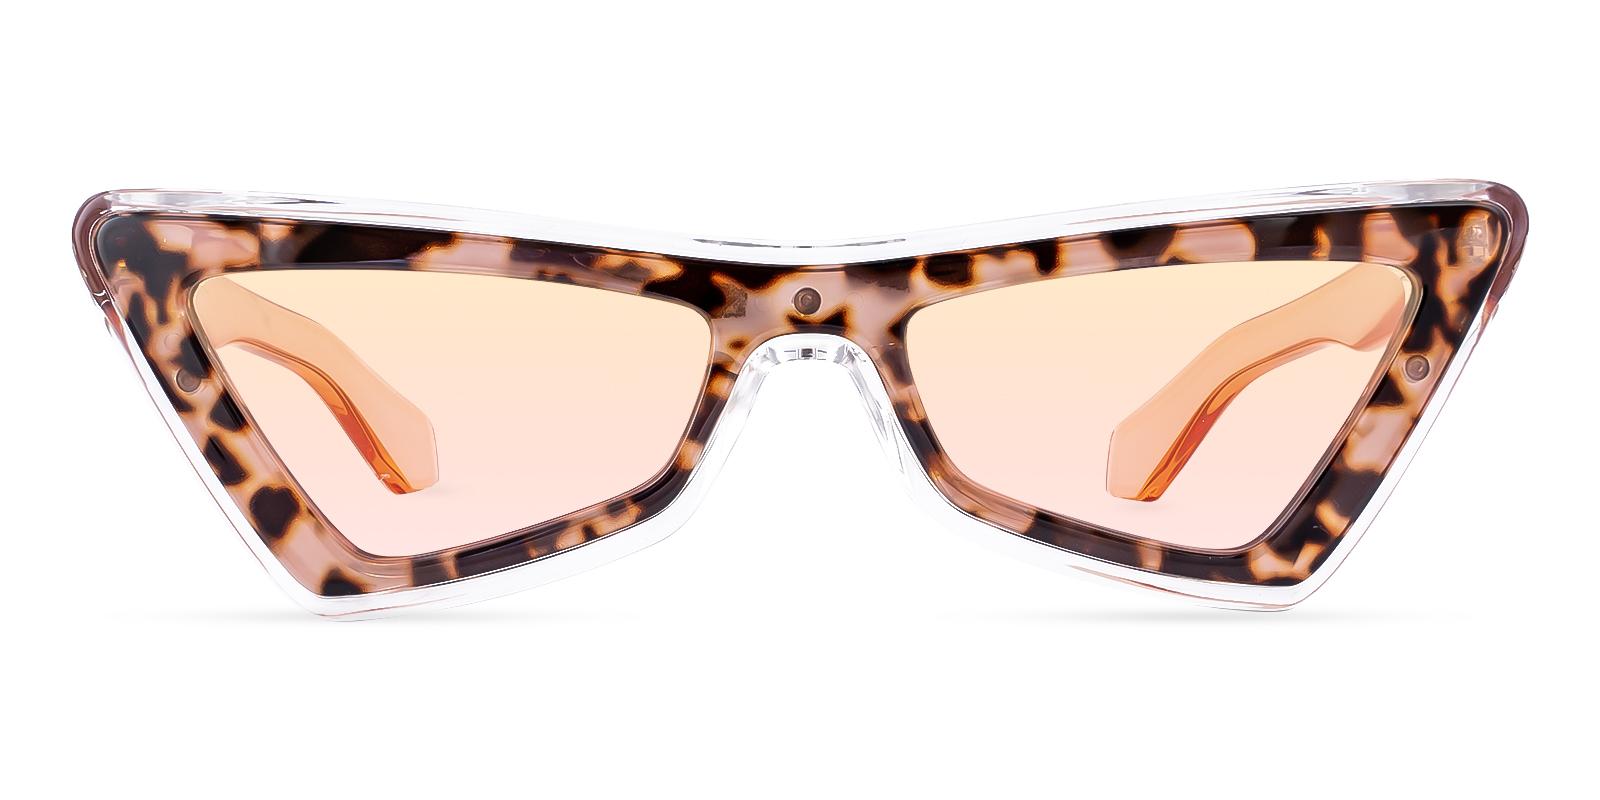 Cadeous Tortoise Acetate Sunglasses , UniversalBridgeFit Frames from ABBE Glasses